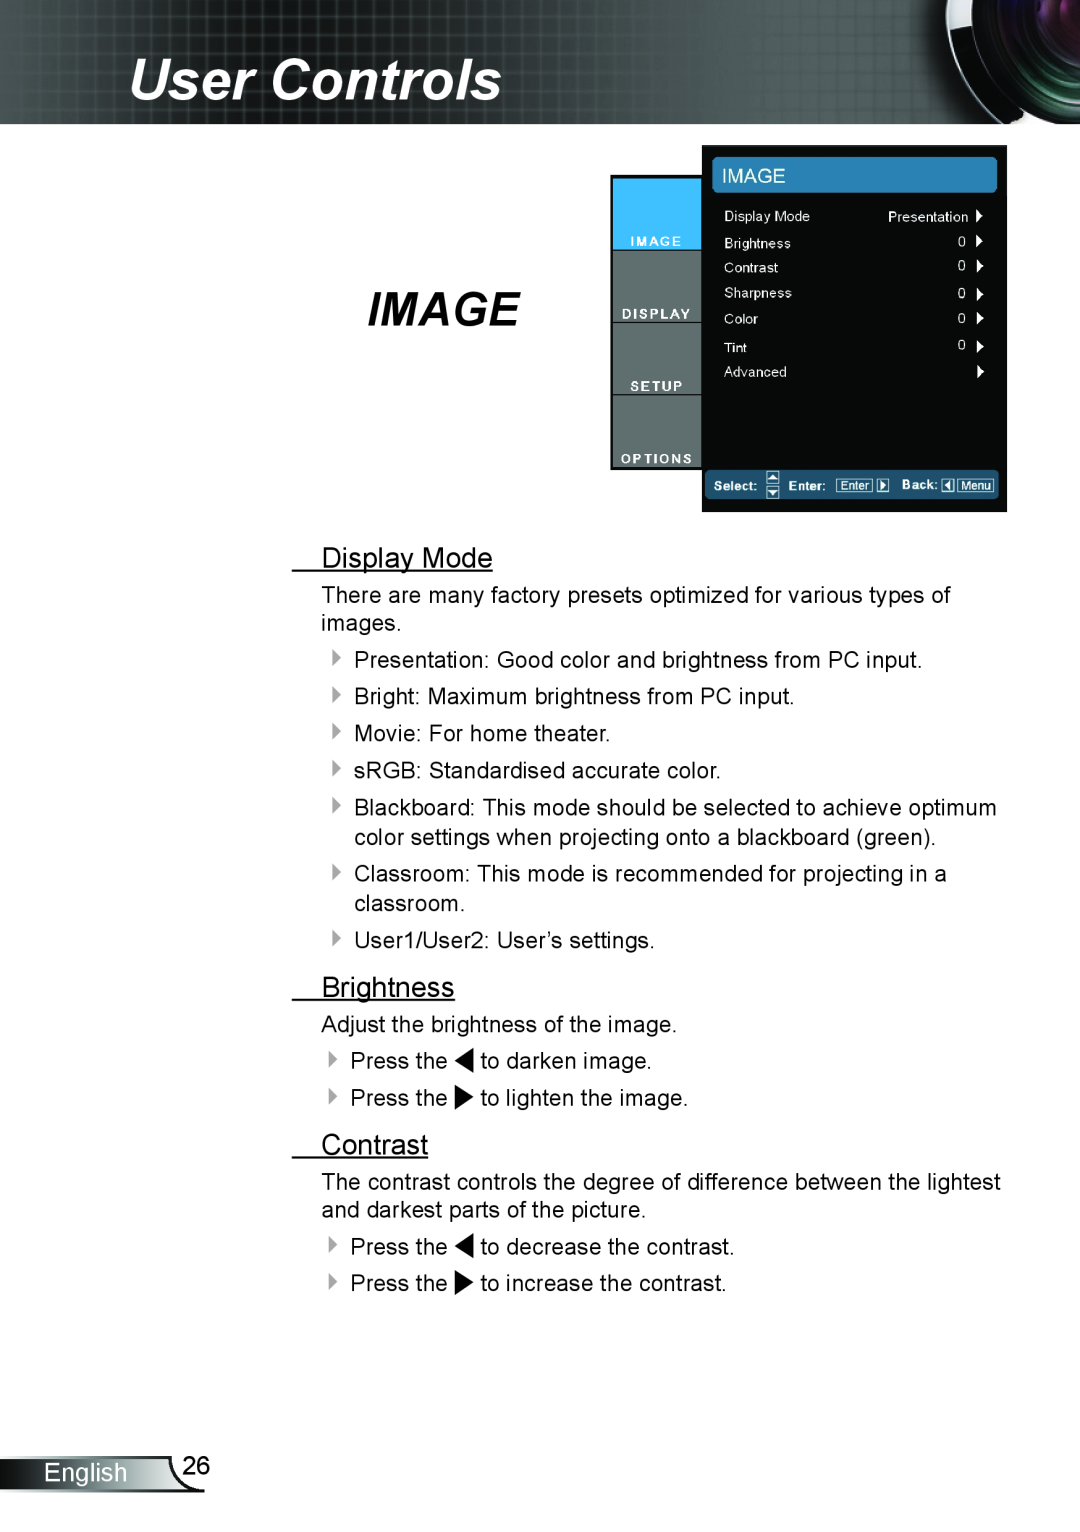 Optoma Technology TH7500NL manual Image, Display Mode, Brightness, Contrast, User Controls, English 